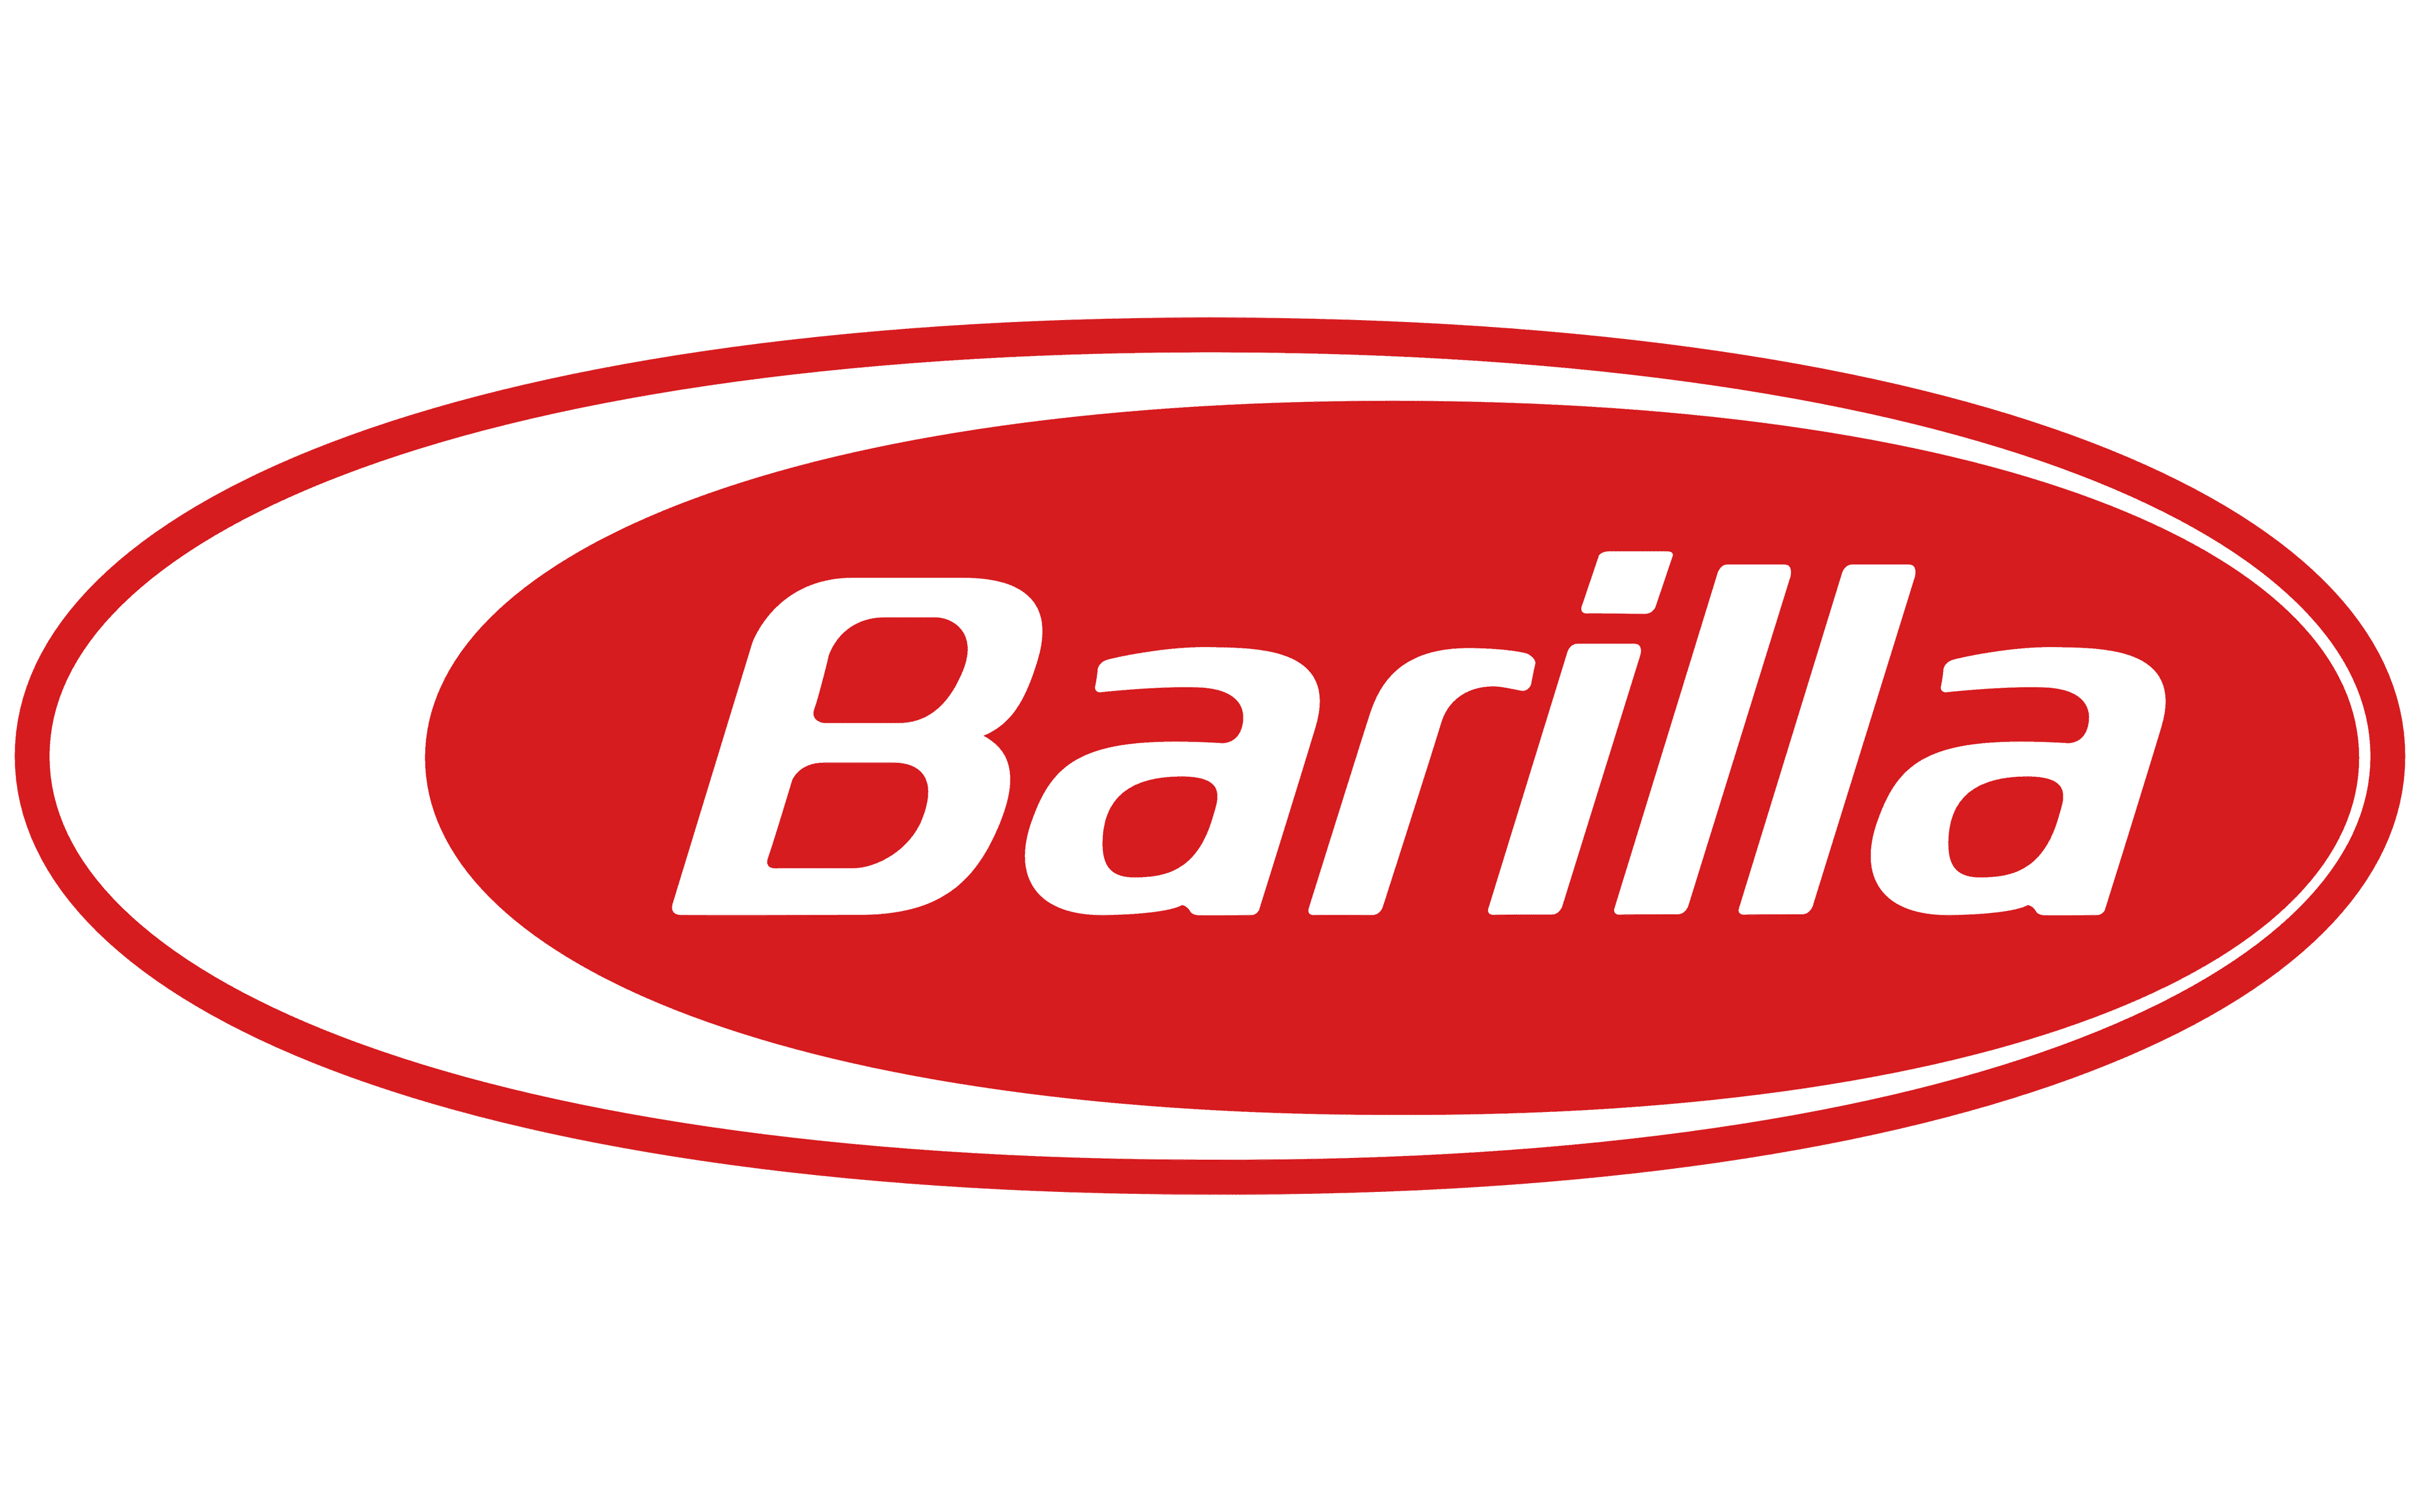 barilla-logo